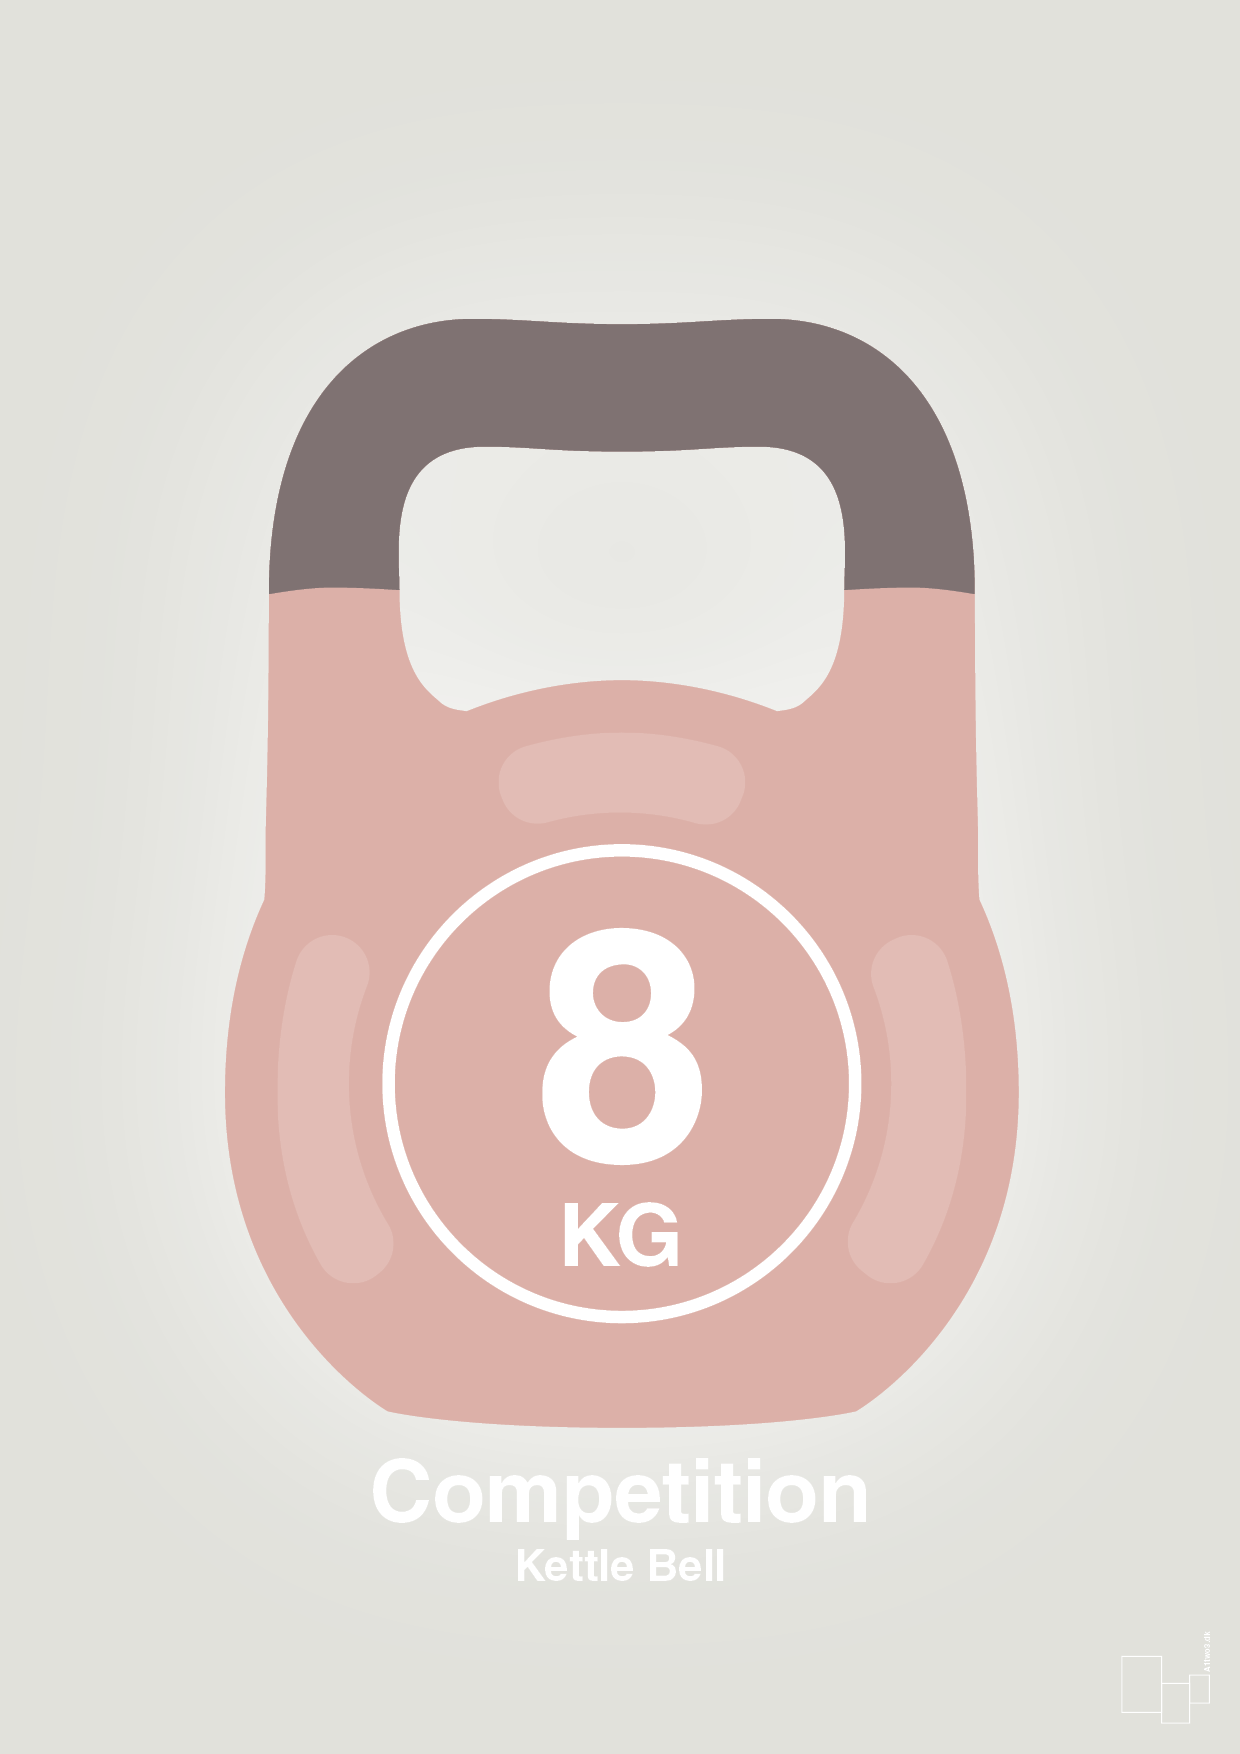 kettle bell 8 kg - competition color - Plakat med Grafik i Painters White